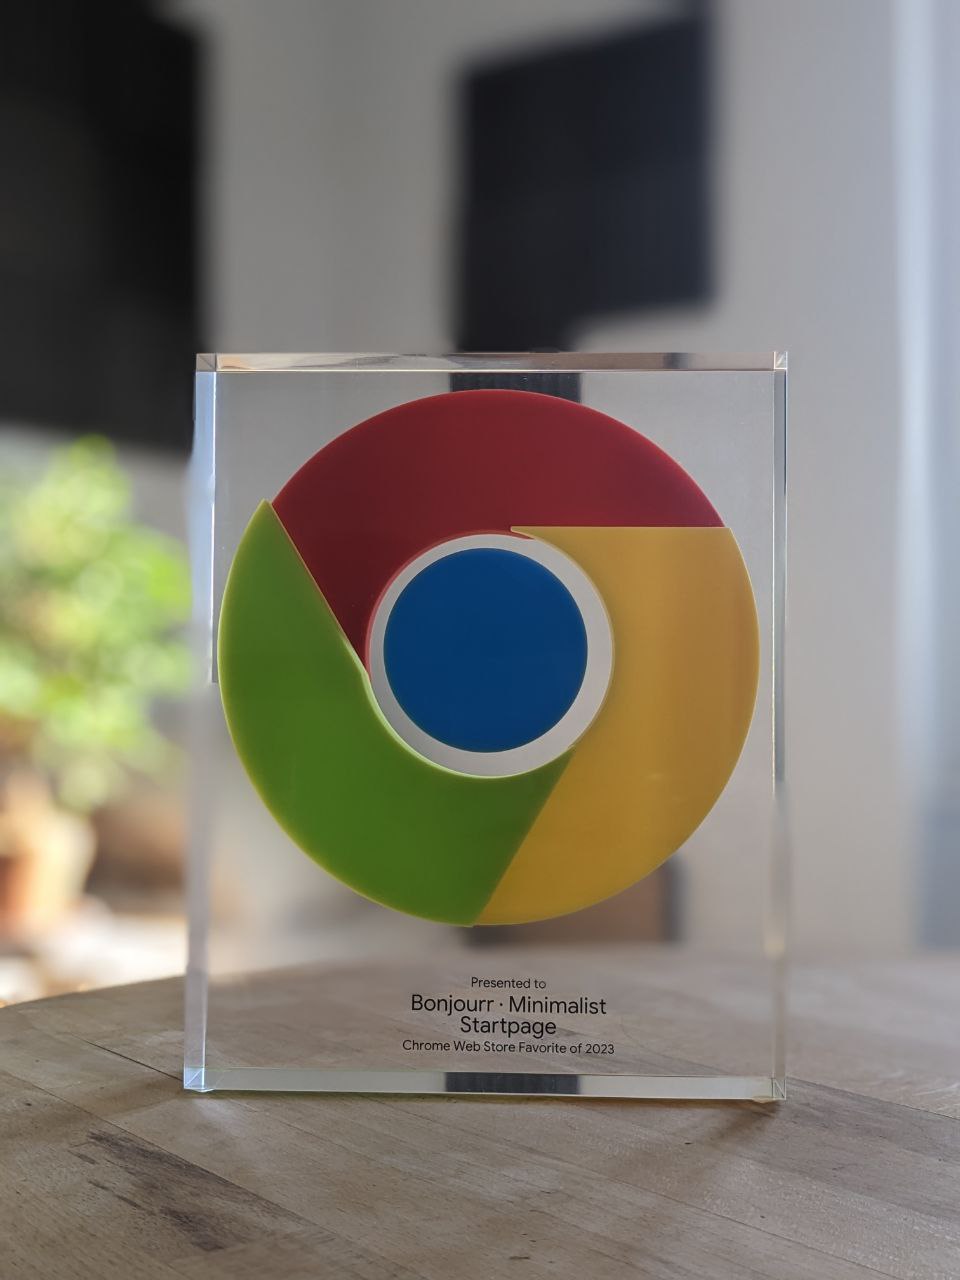 Got our Chrome Web Store trophy 😎